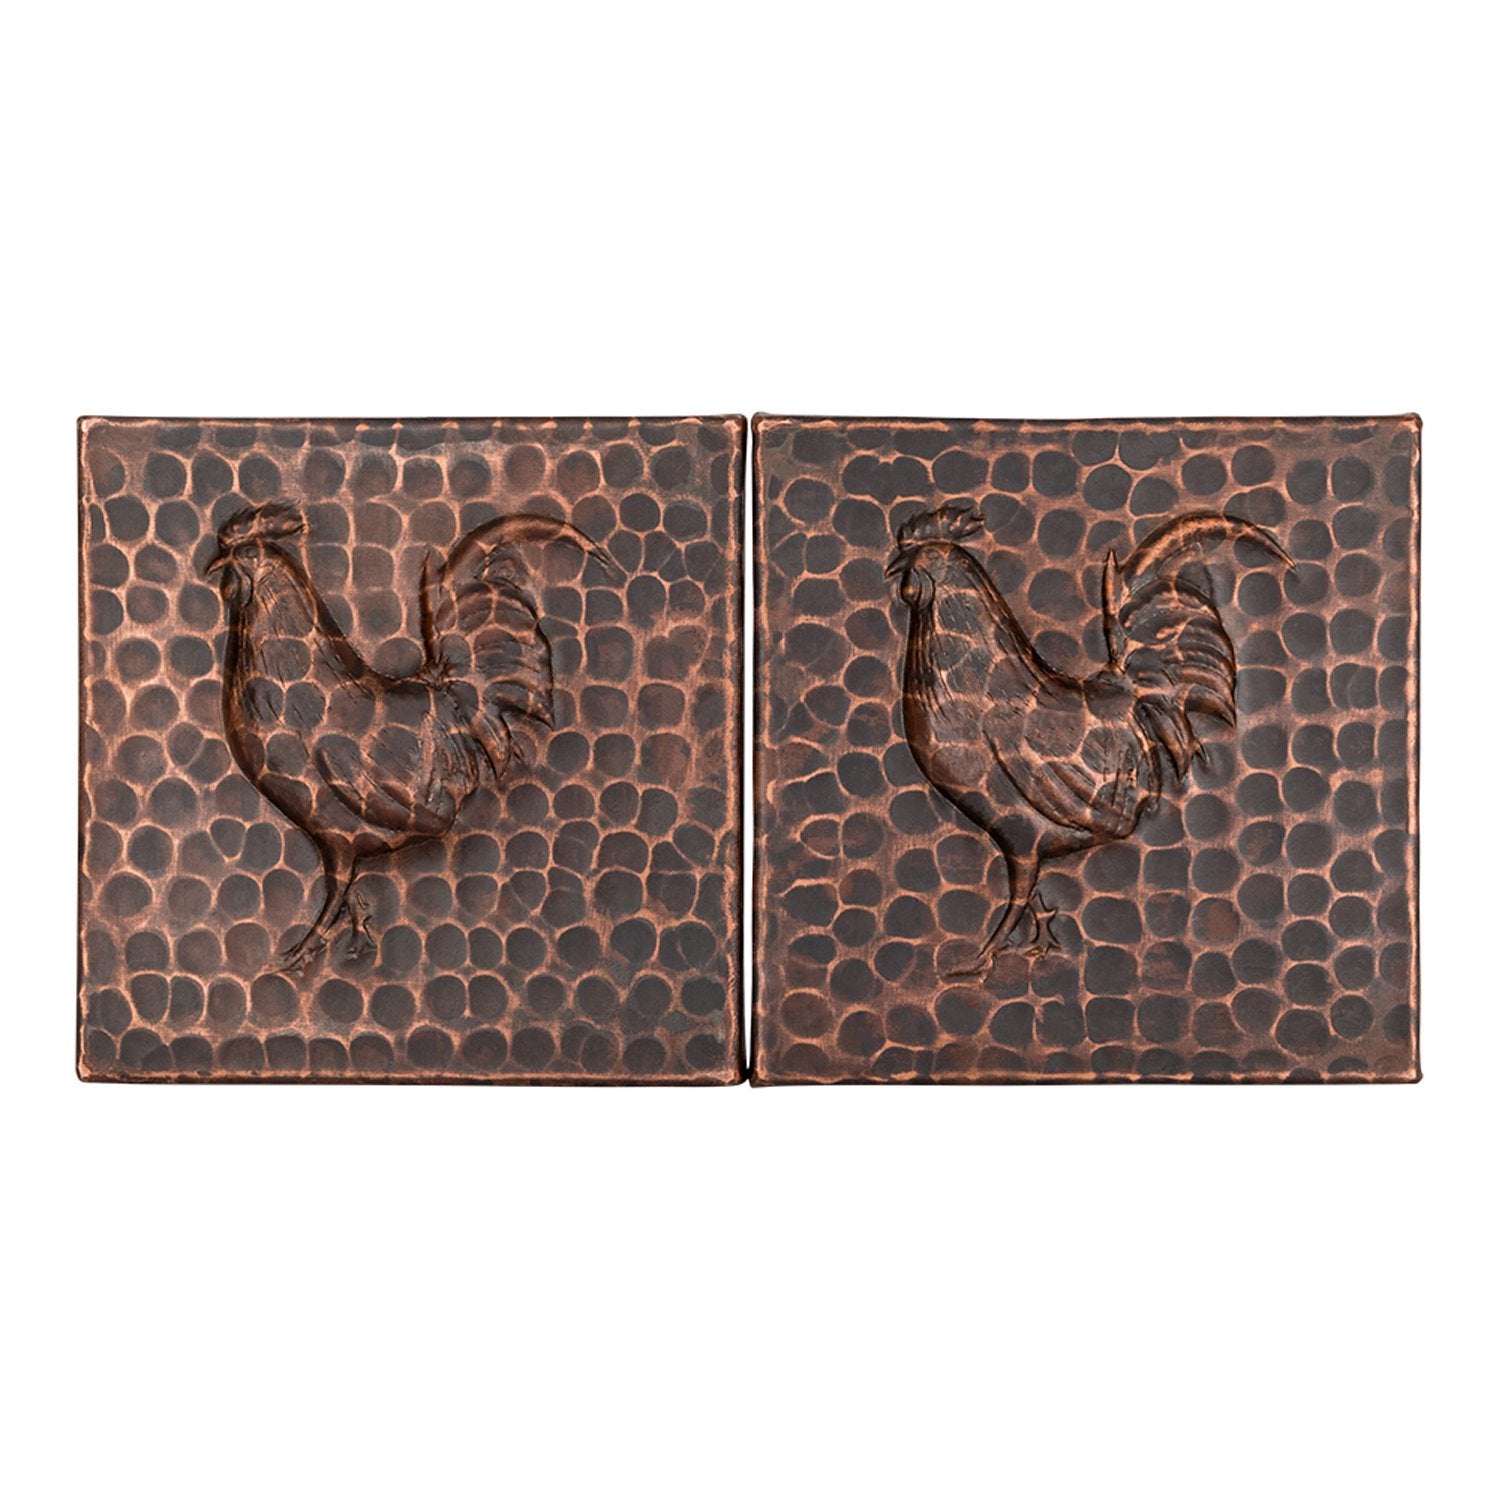 4" x 4" Hammered Copper Rooster Tile, pack of 4 Tiles